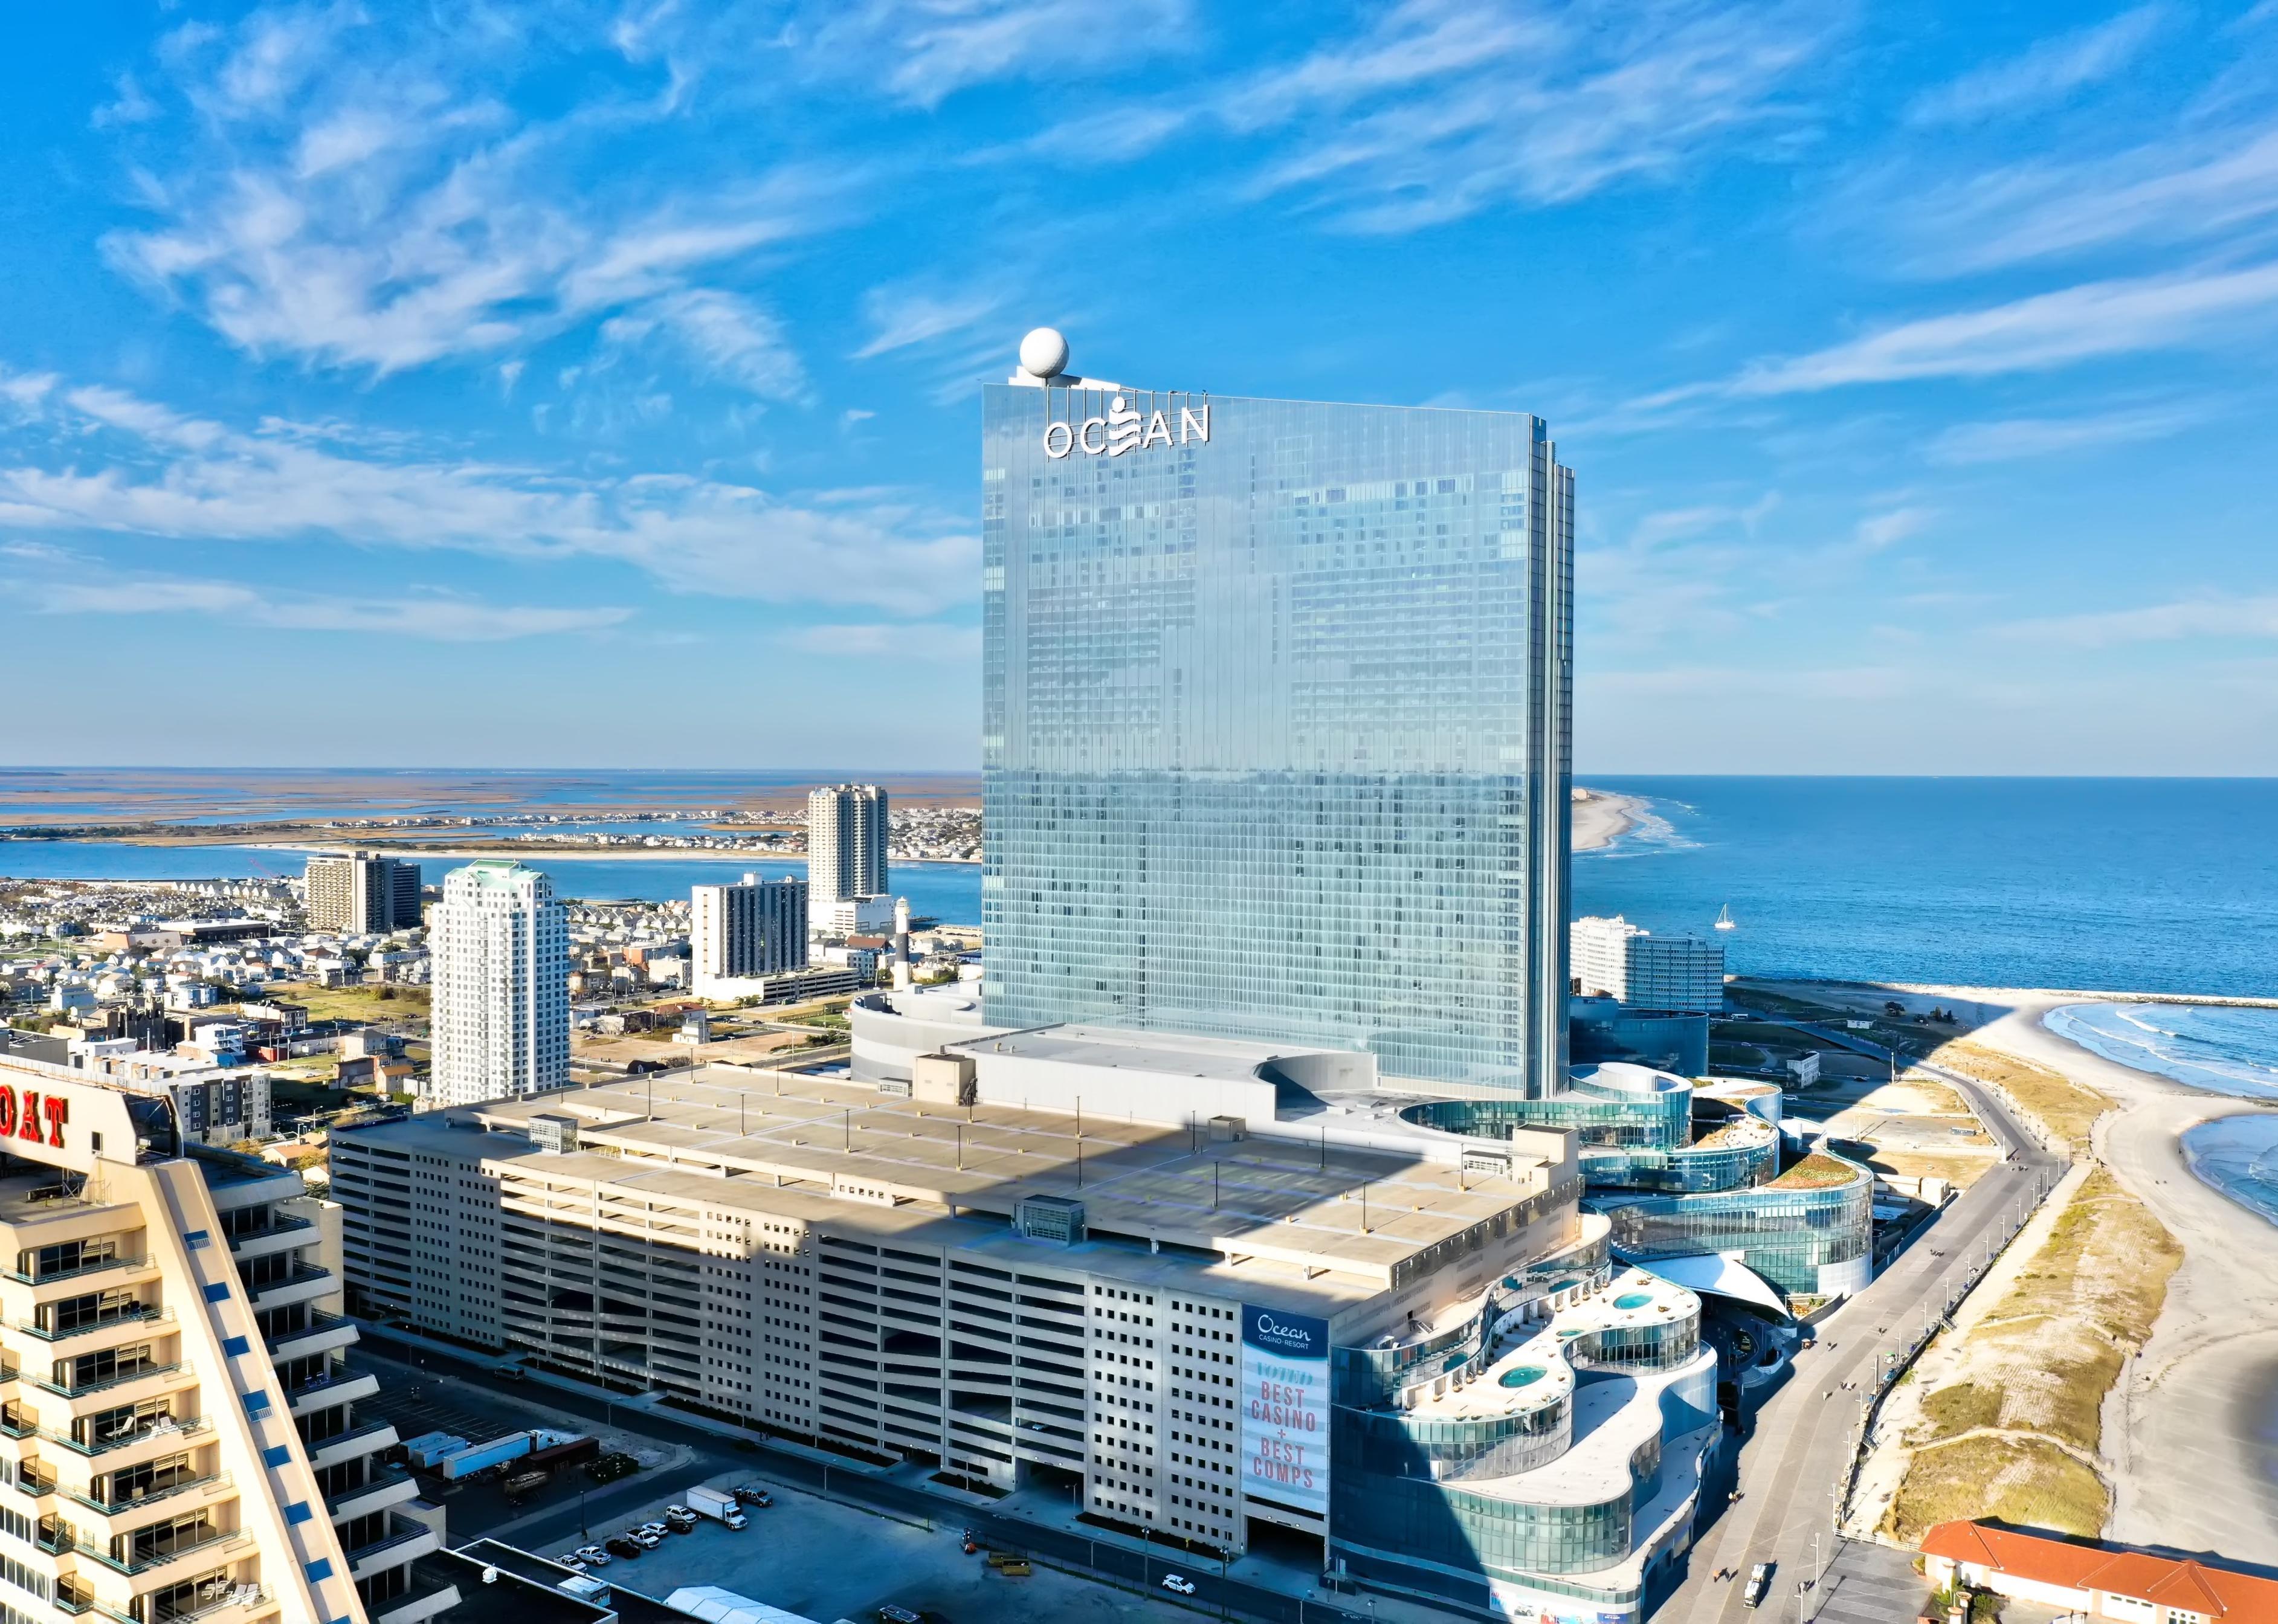 Ocean Resort Casino in Atlantic City.